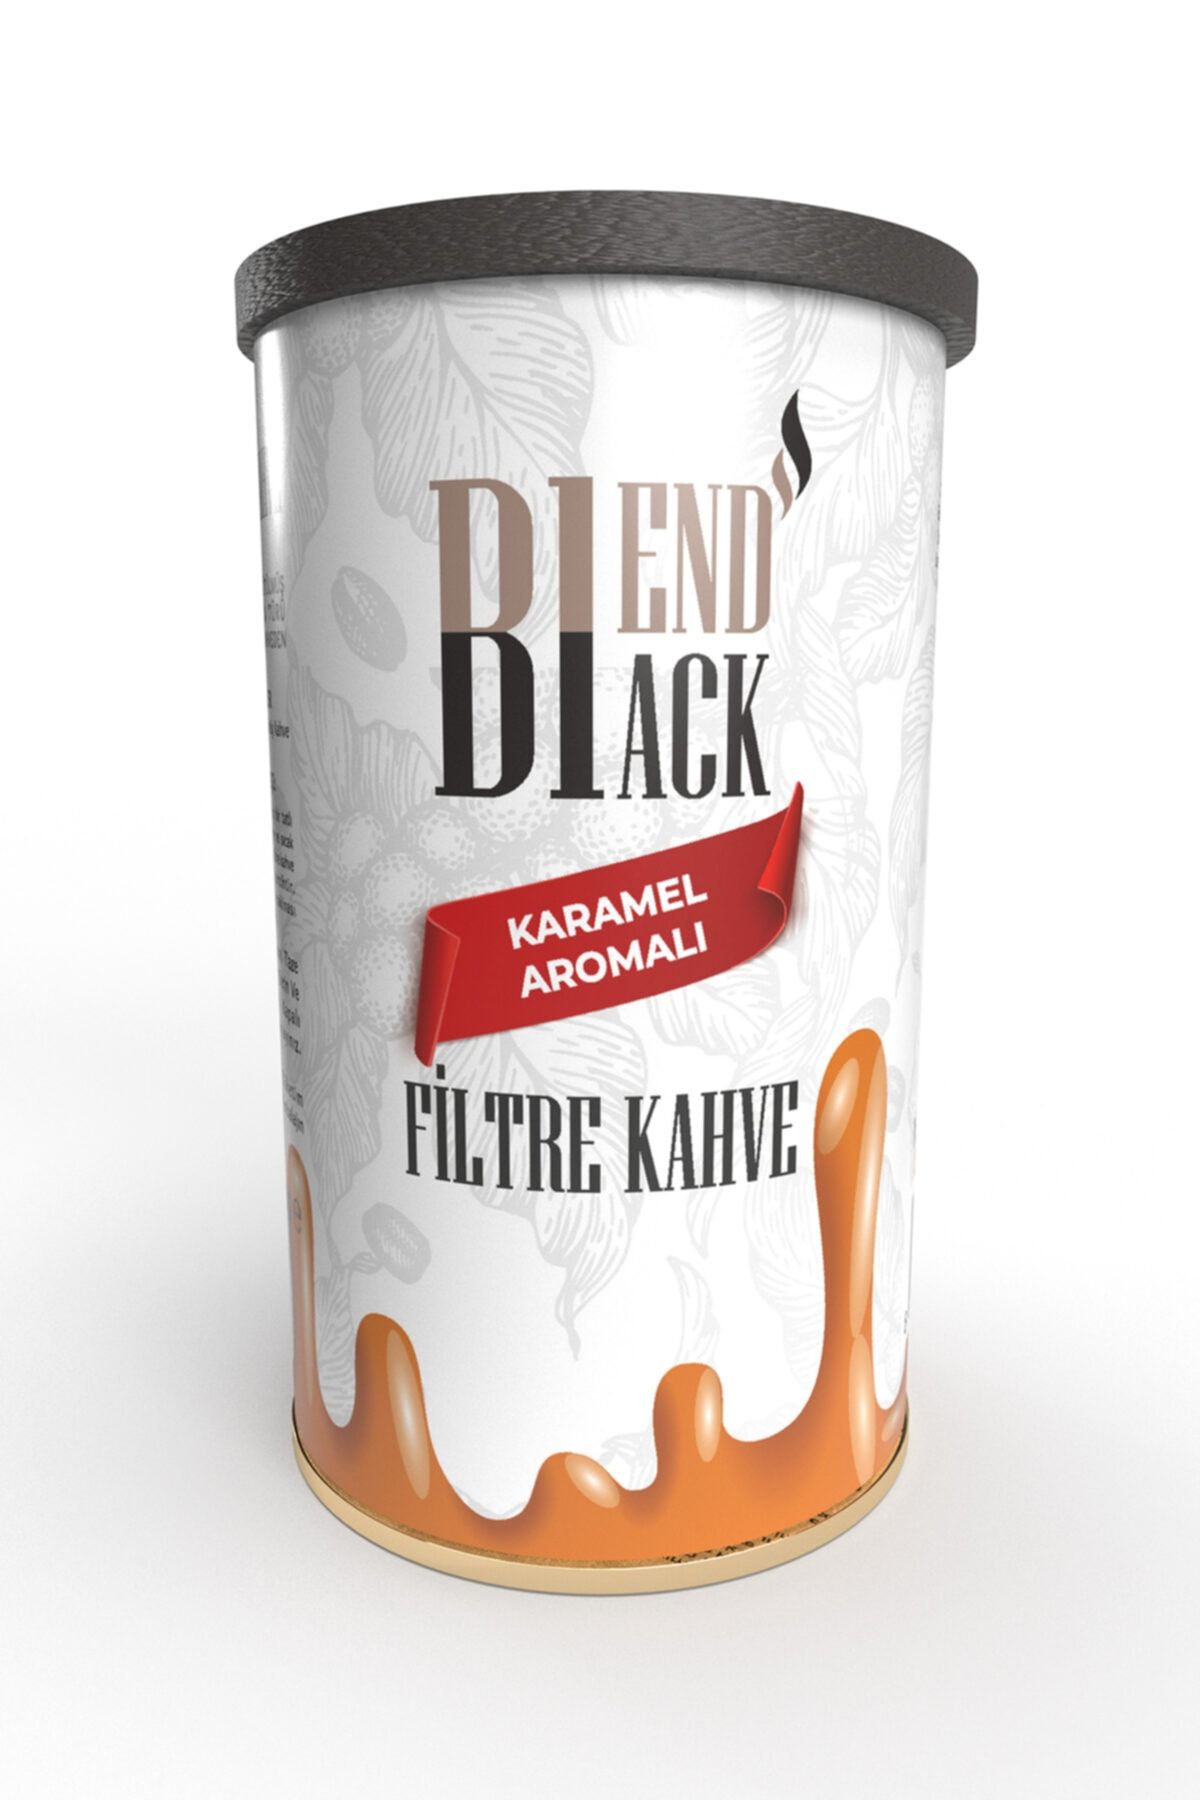 Blendblack Filtre Kahve Karamel Aromalı 250gr Teneke Kutu